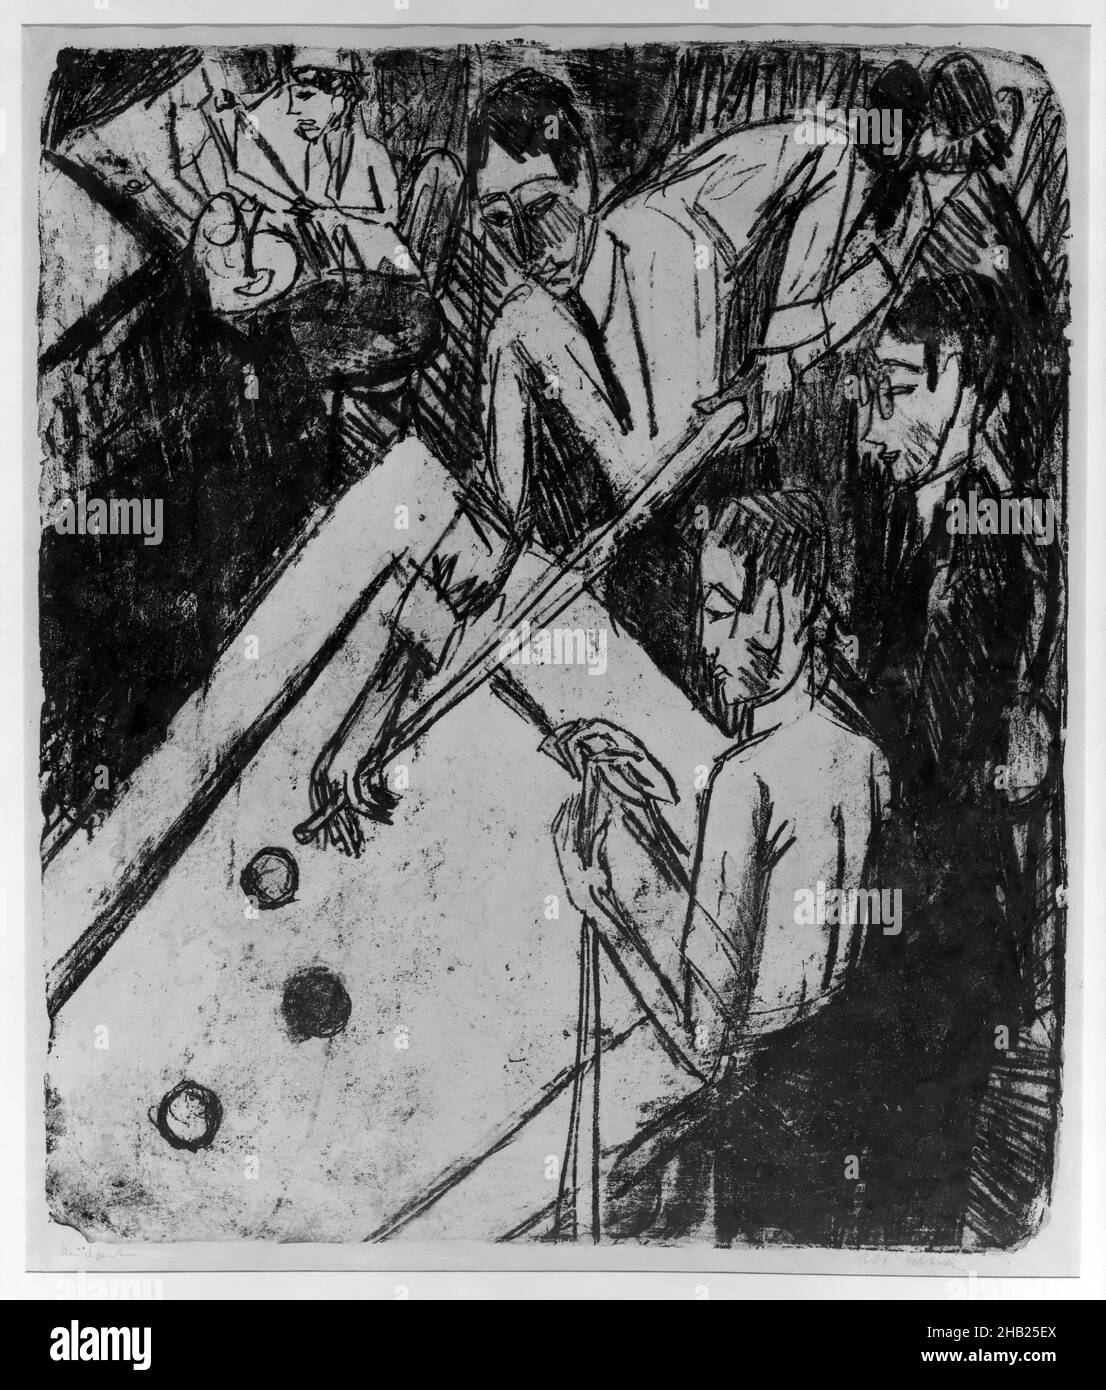 Billiard Players, Billardspieler, Ernst Ludwig Kirchner, German, 1880-1938, Lithograph on wove paper, Germany, 1915, Image: 23 3/8 x 19 13/16 in., 59.4 x 50.3 cm, cool, figures, German Art, modern, playing pool Stock Photo